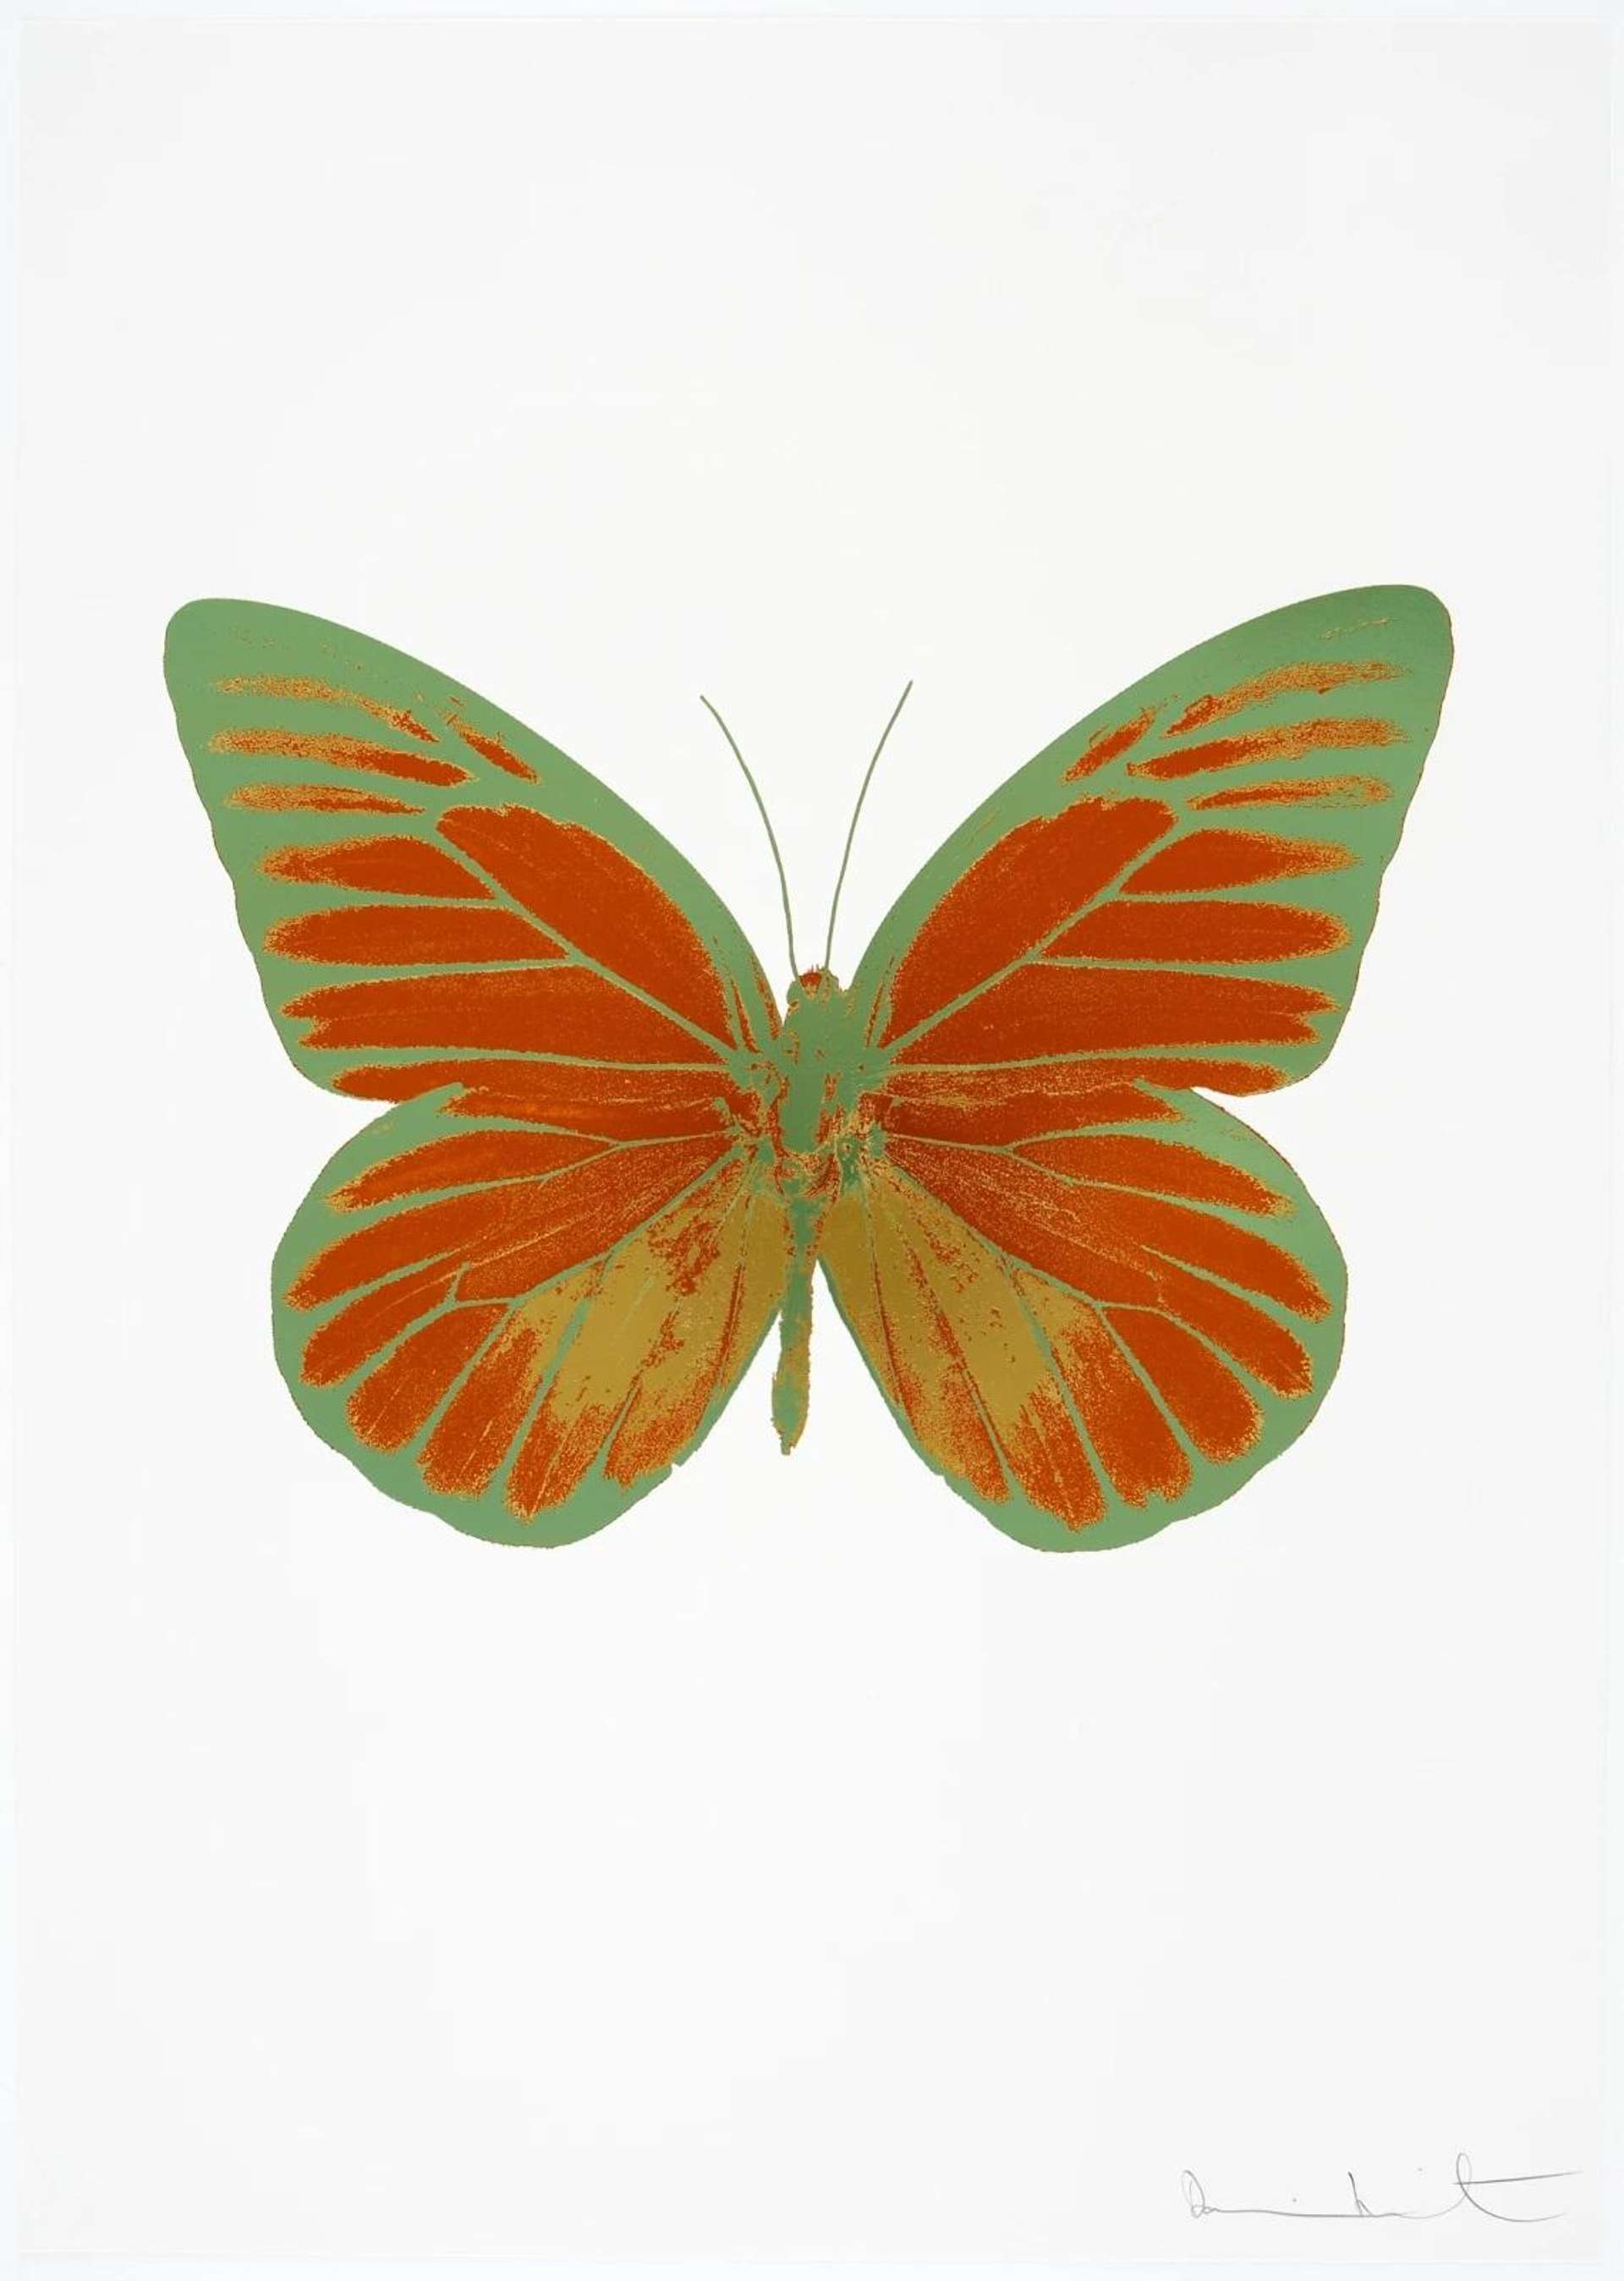 Damien Hirst: The Souls I (prairie copper, leaf green, cool gold) - Signed Print